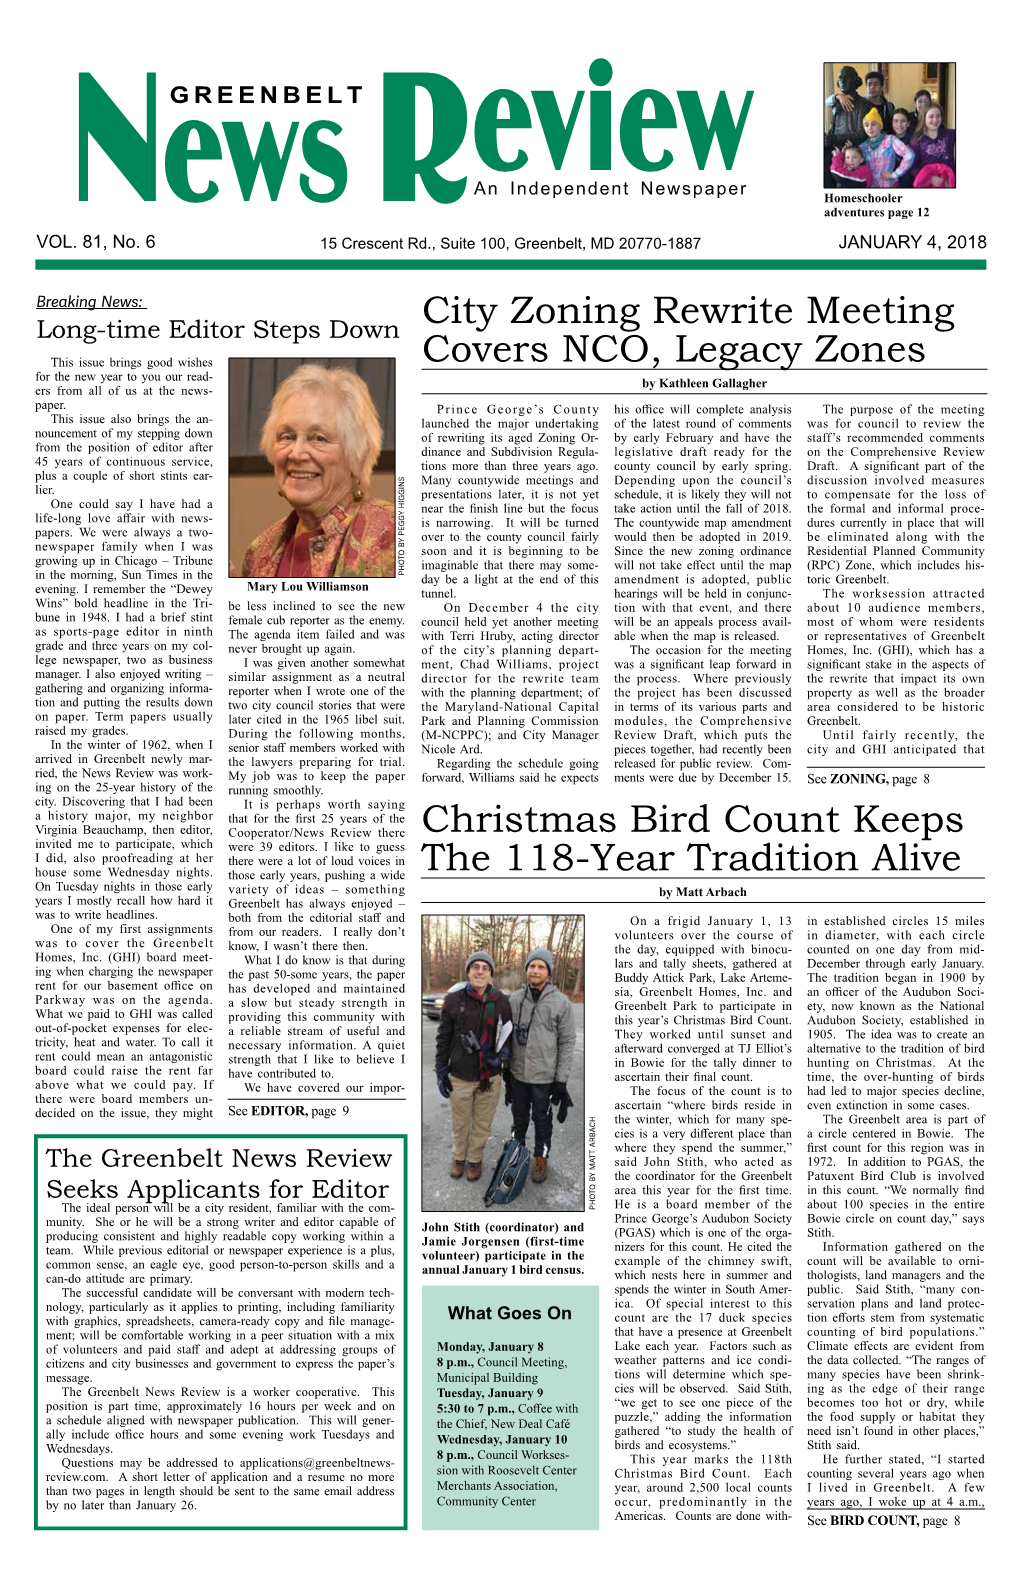 City Zoning Rewrite Meeting Covers NCO, Legacy Zones Christmas Bird